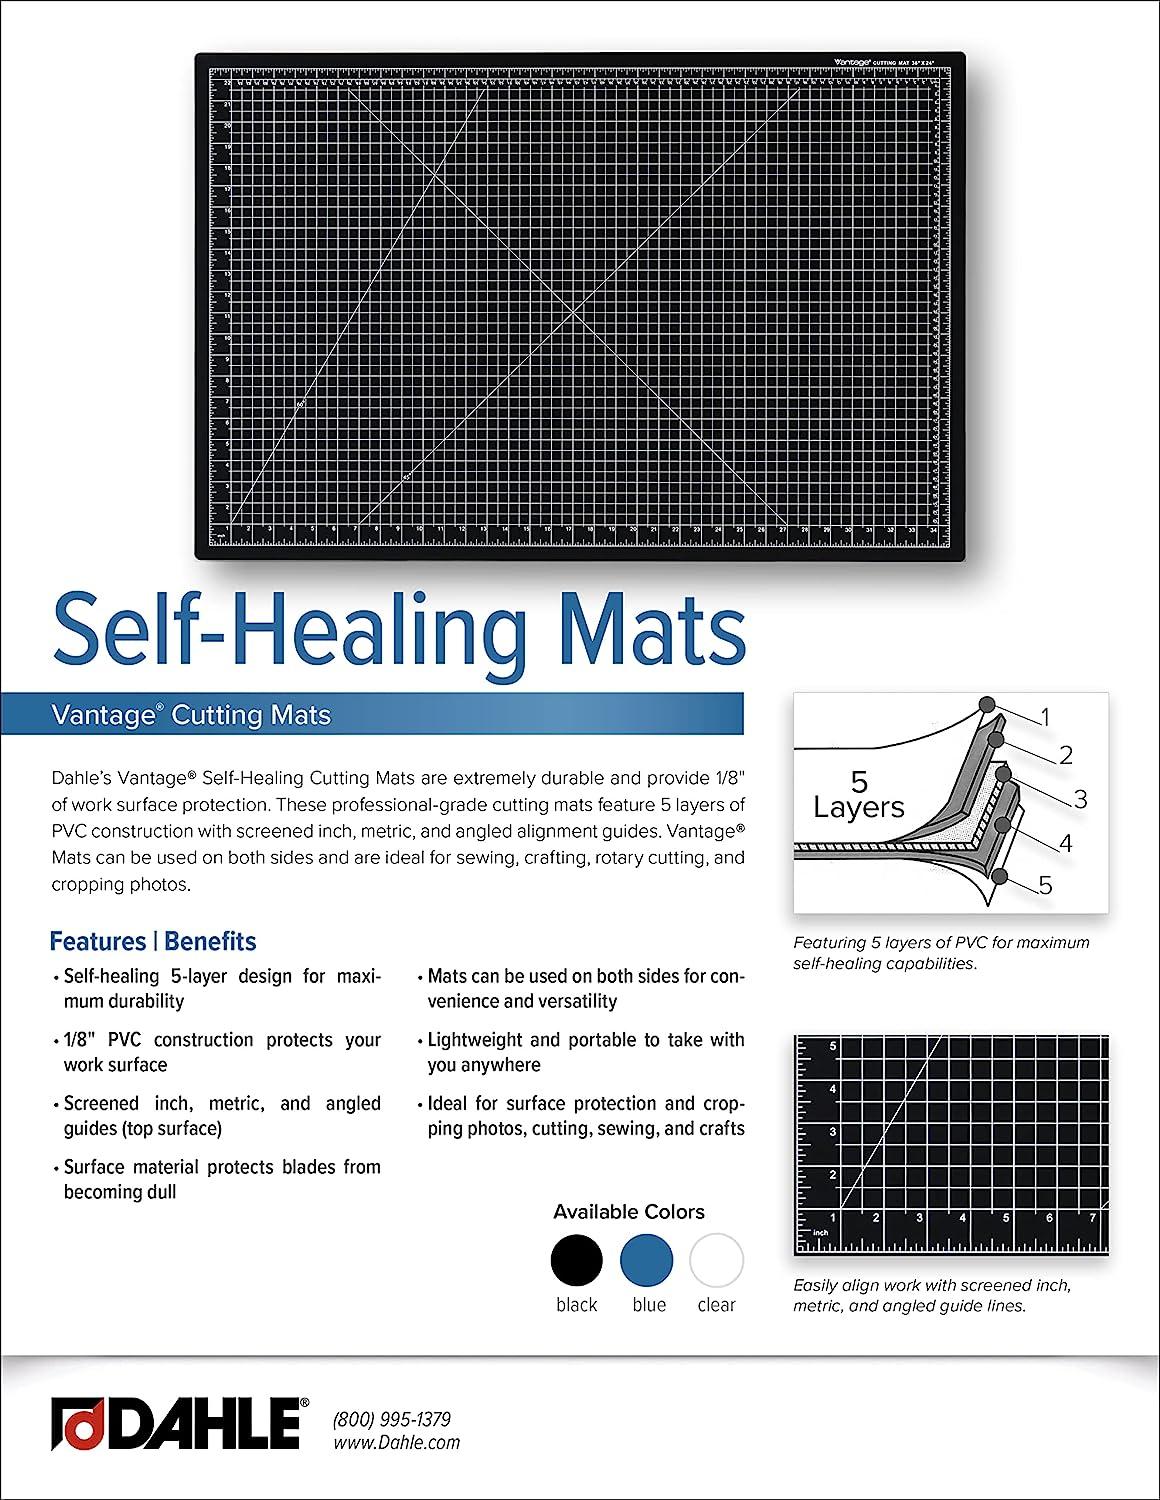 Dahle Vantage Self-Healing Cutting Mat (36 x 48, Blue)